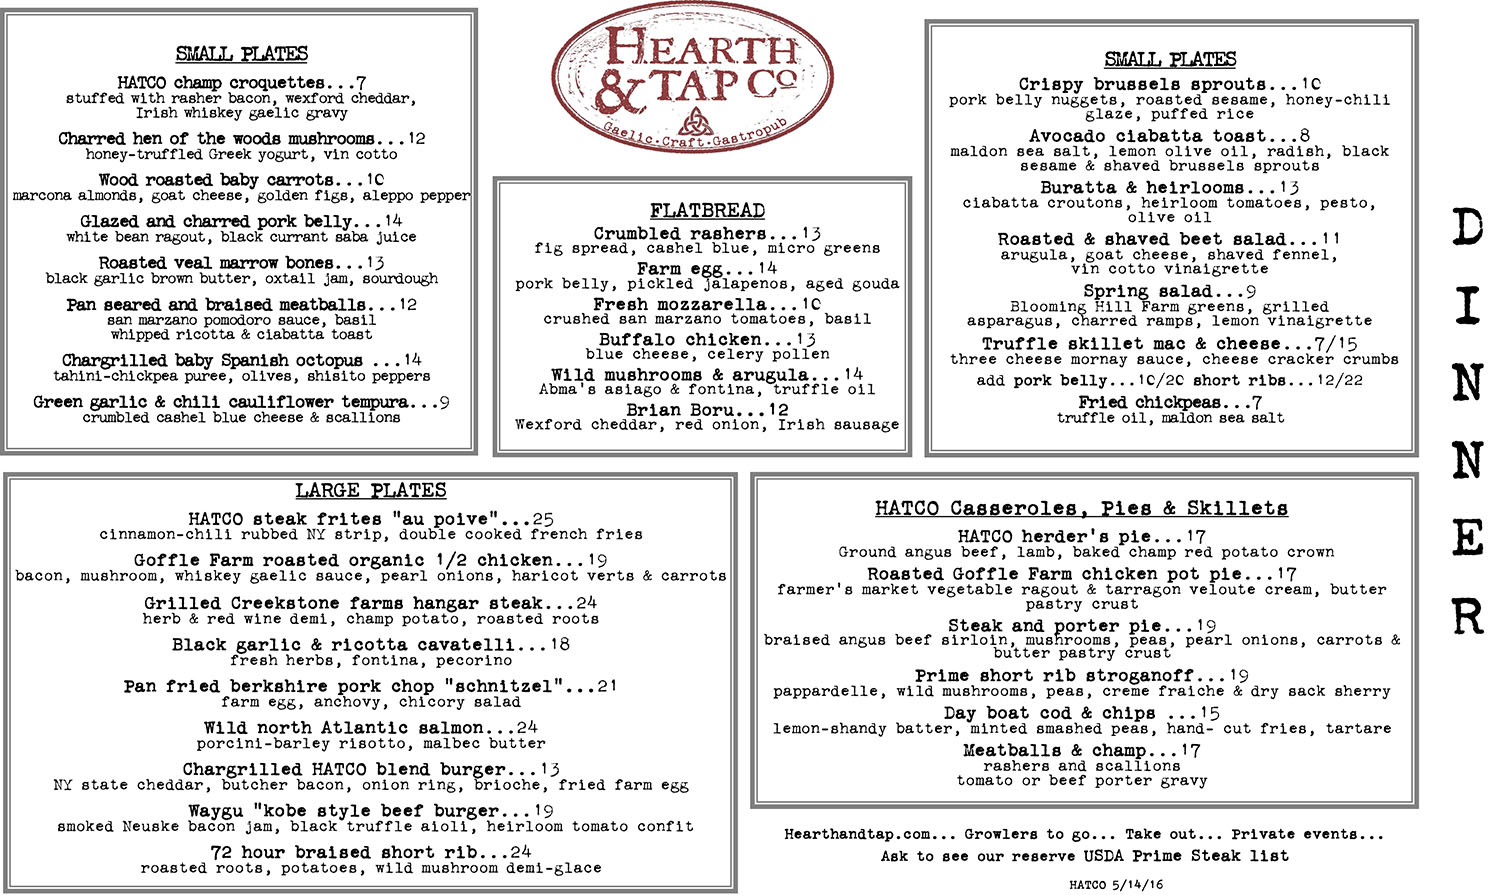 Hearth and tap menu